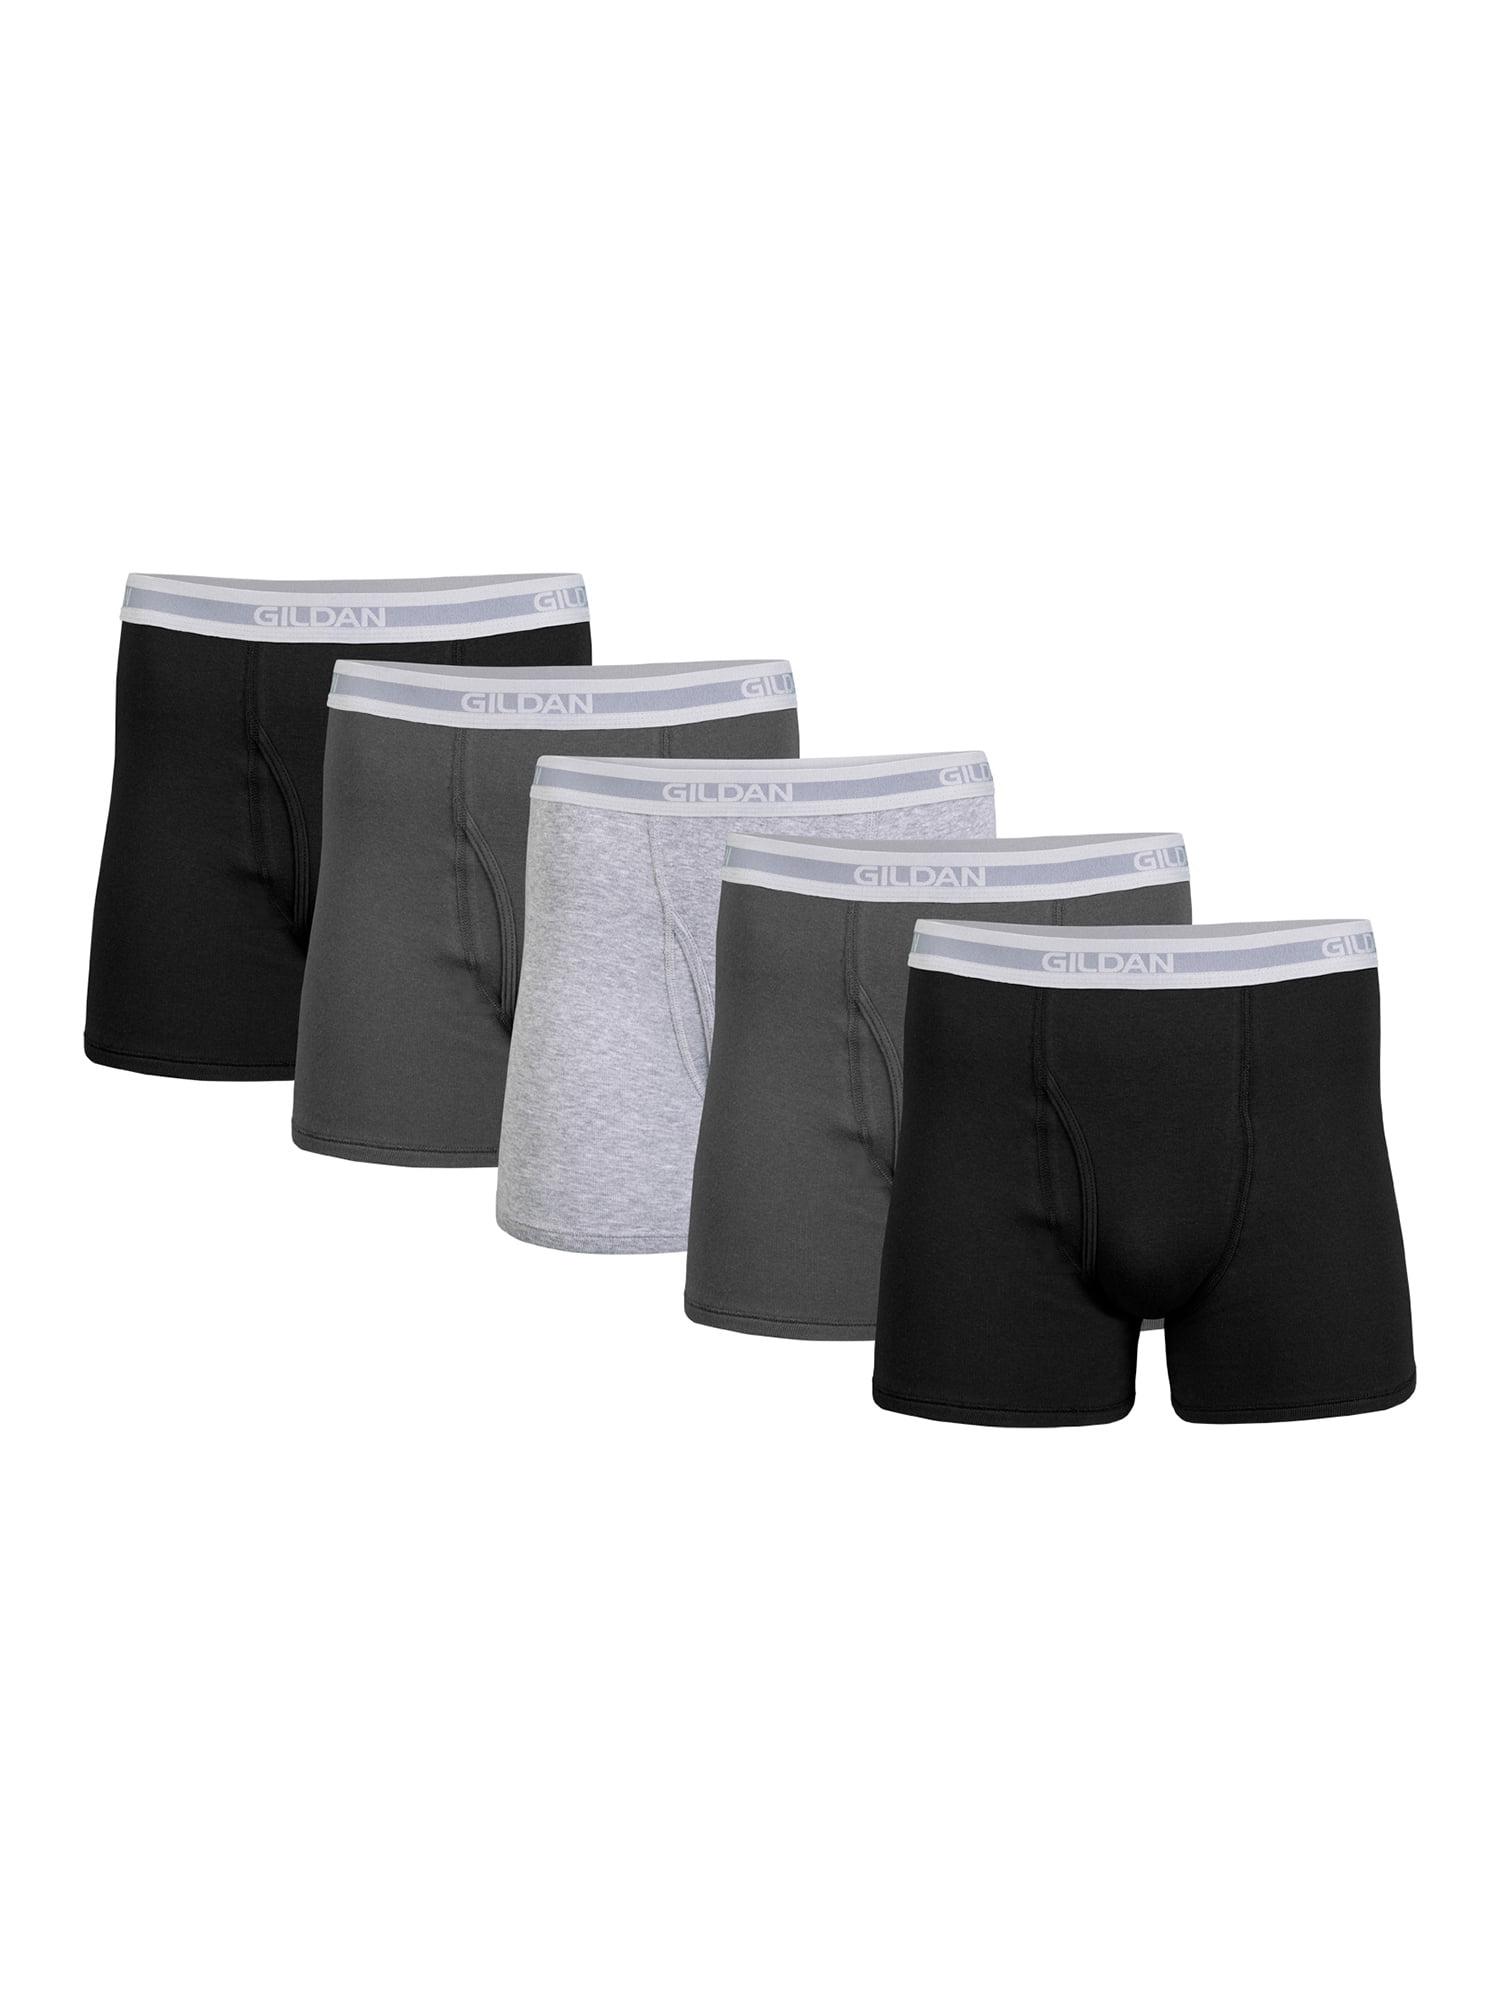 Gildan Adult Men's Short Leg Boxer Briefs, 5-Pack, Sizes S-2XL, 3 Inseam